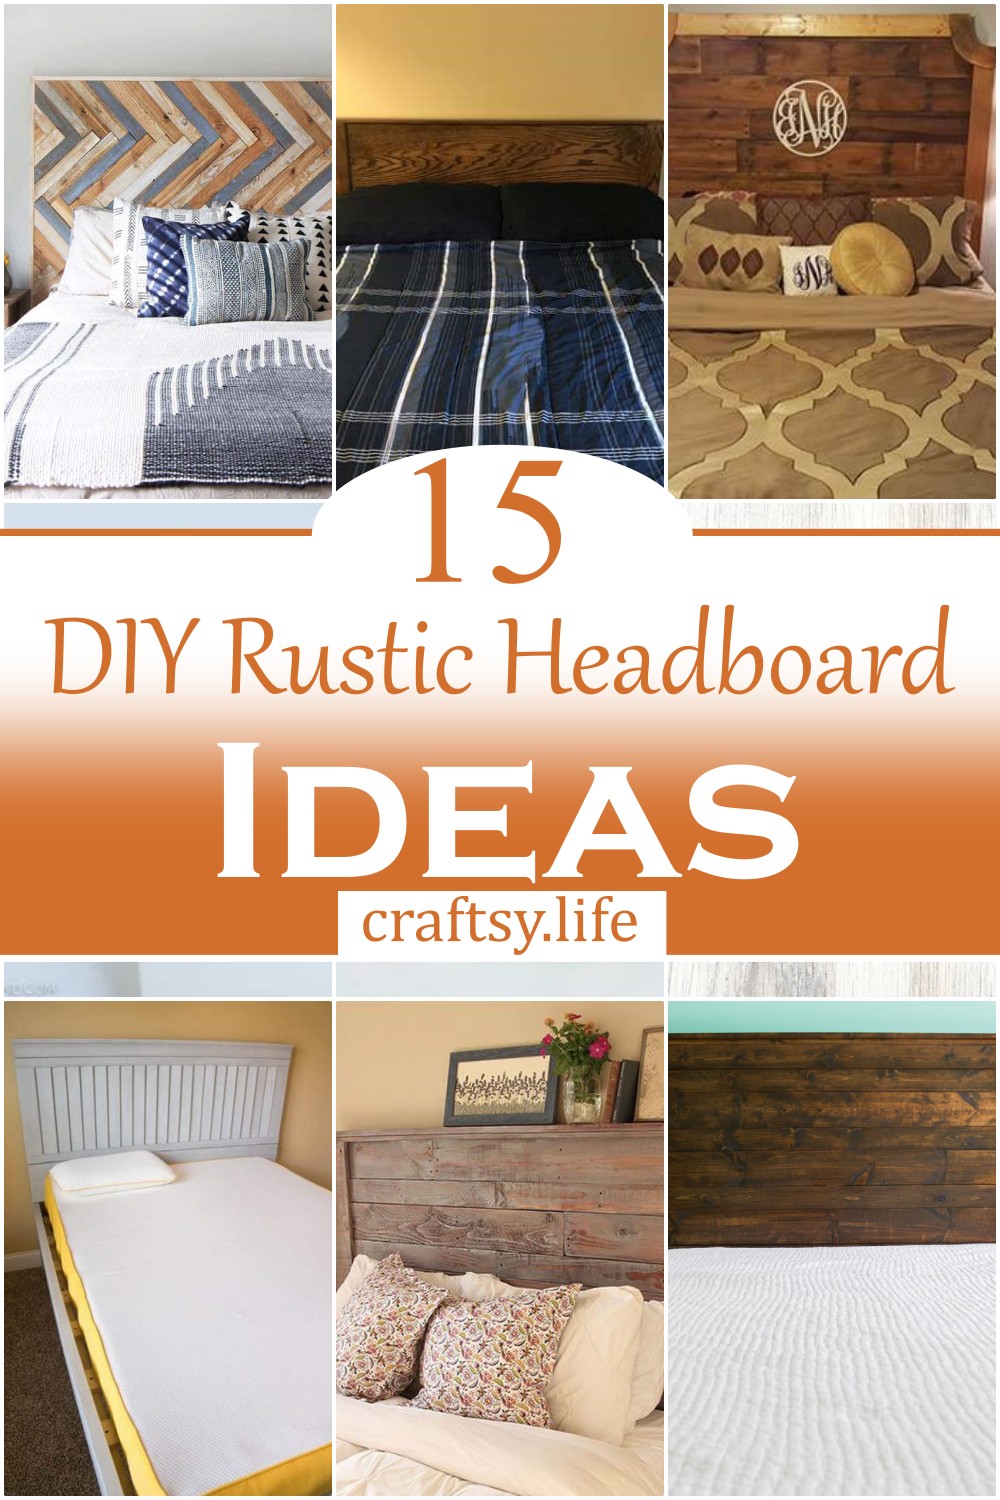 DIY Rustic Headboard Ideas